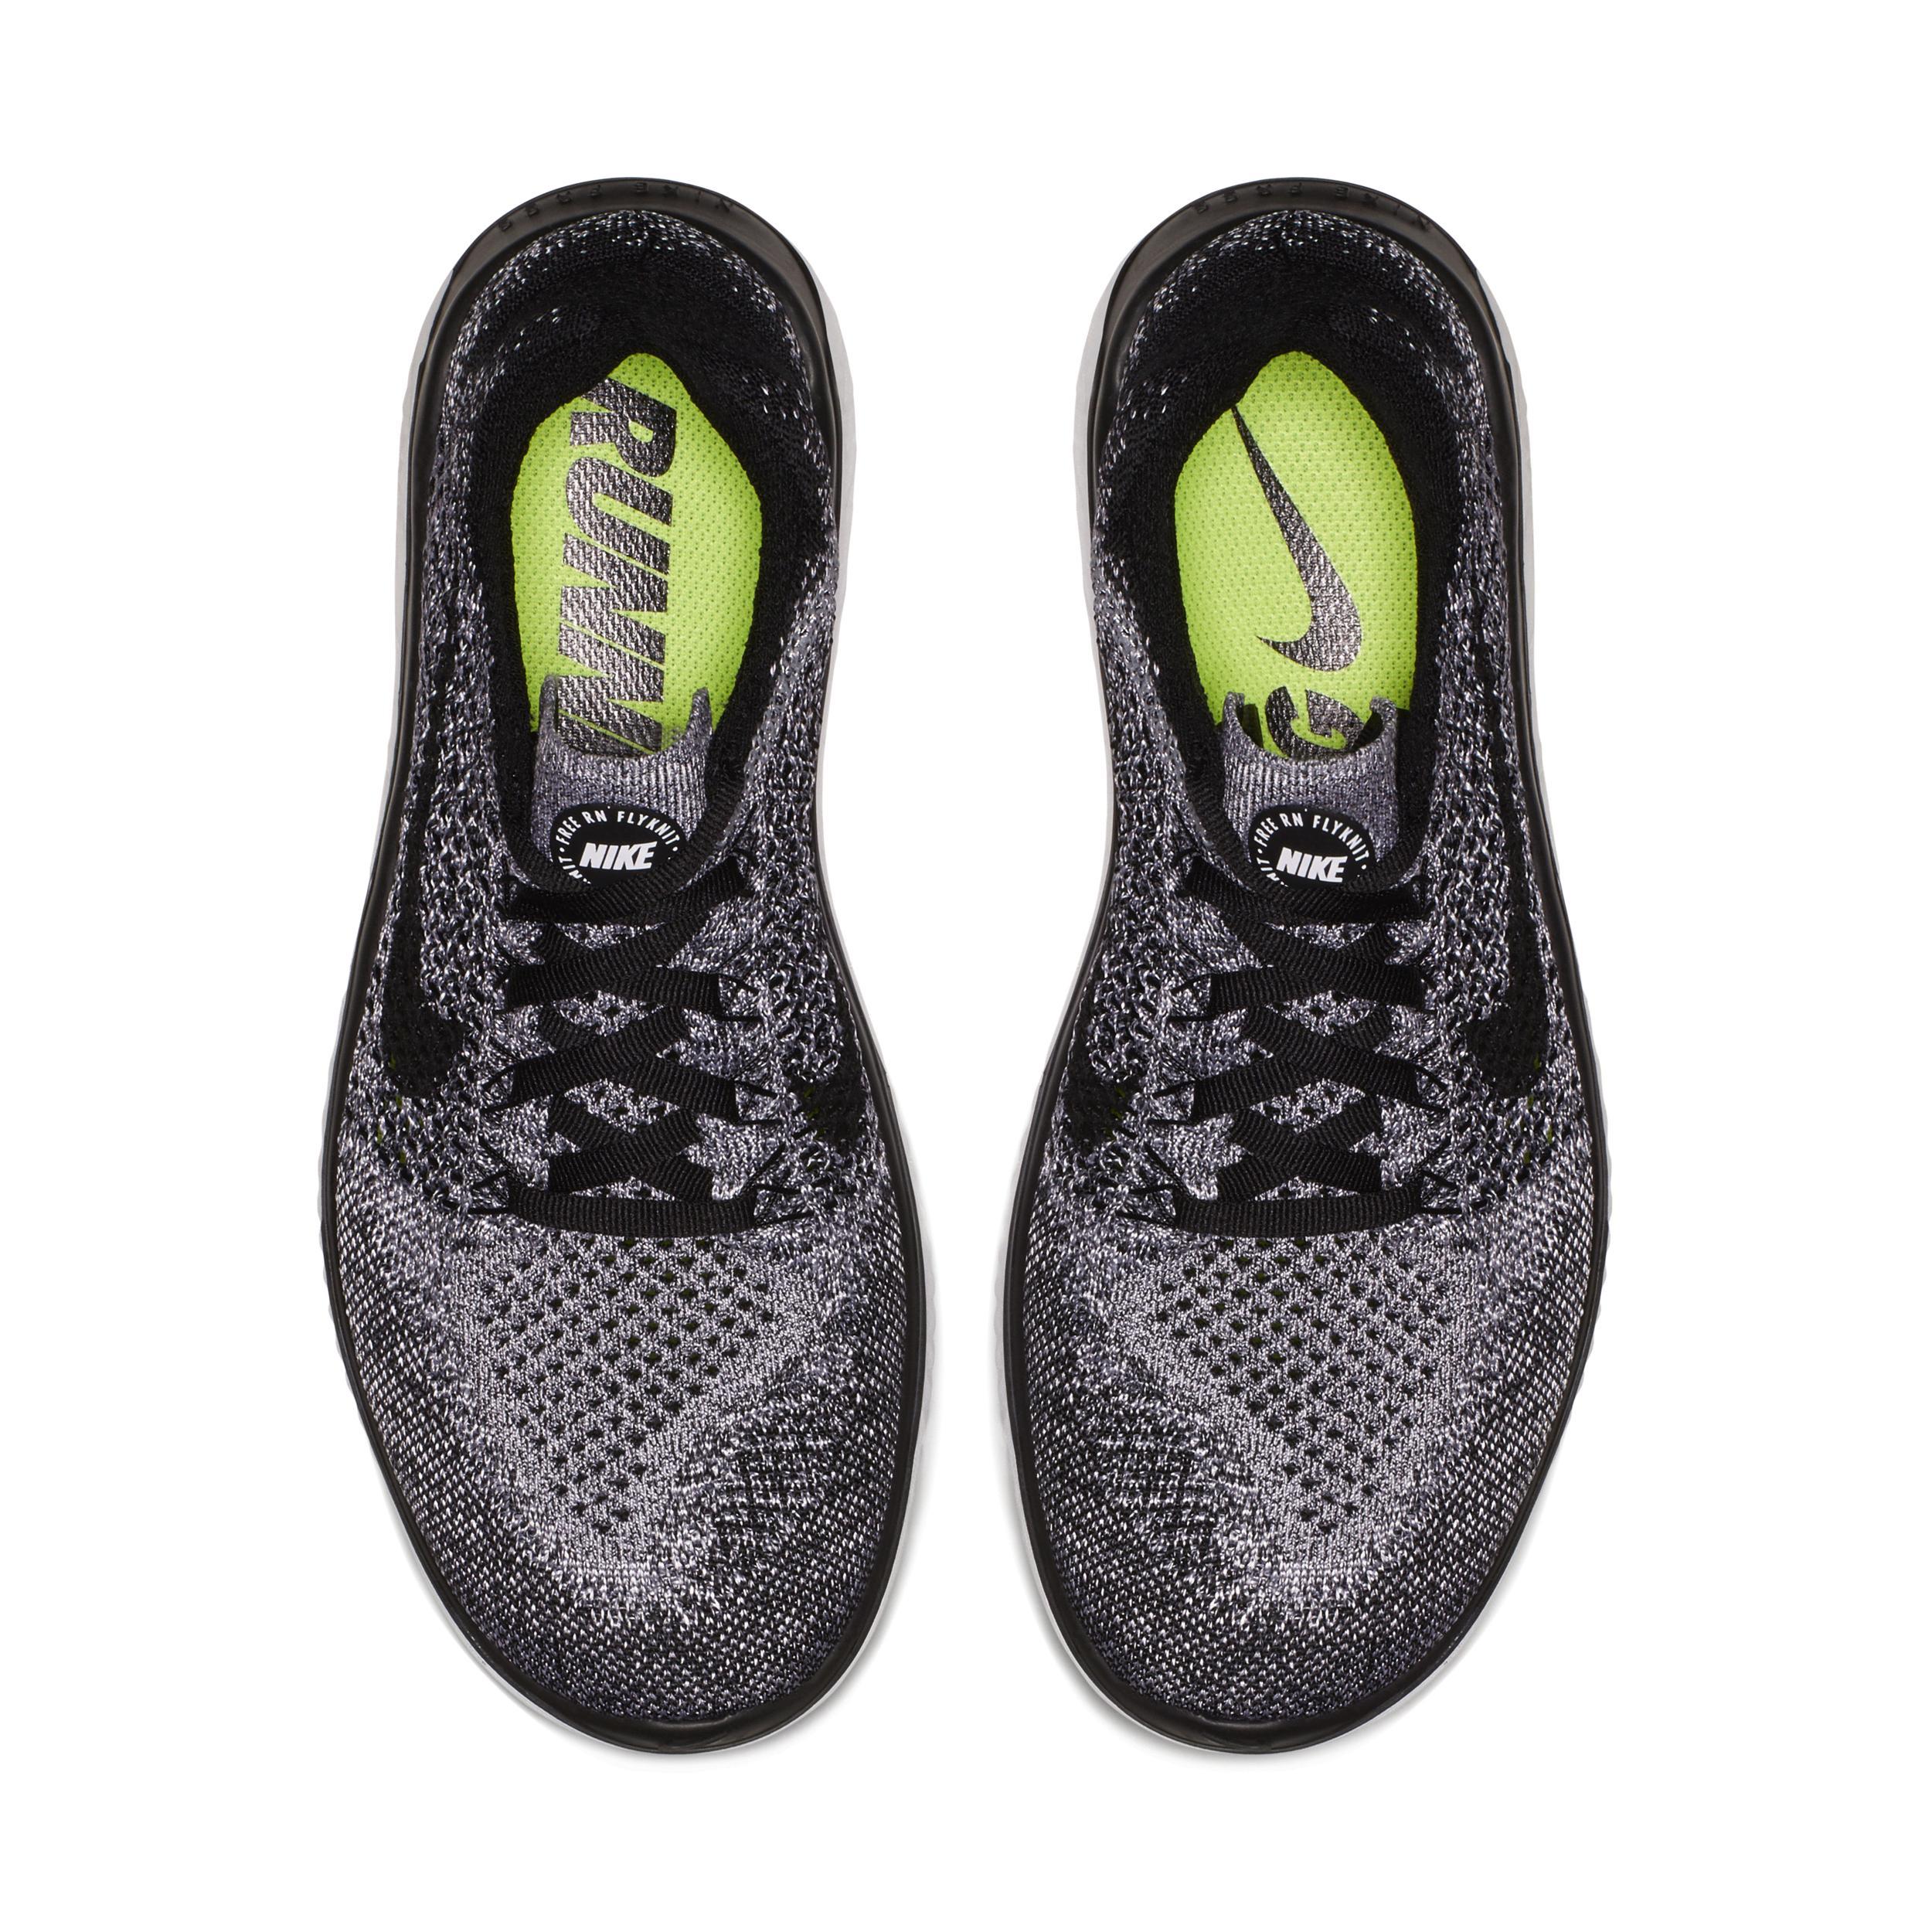 Nike Women's Free Run 2018 Running Shoes Product Image